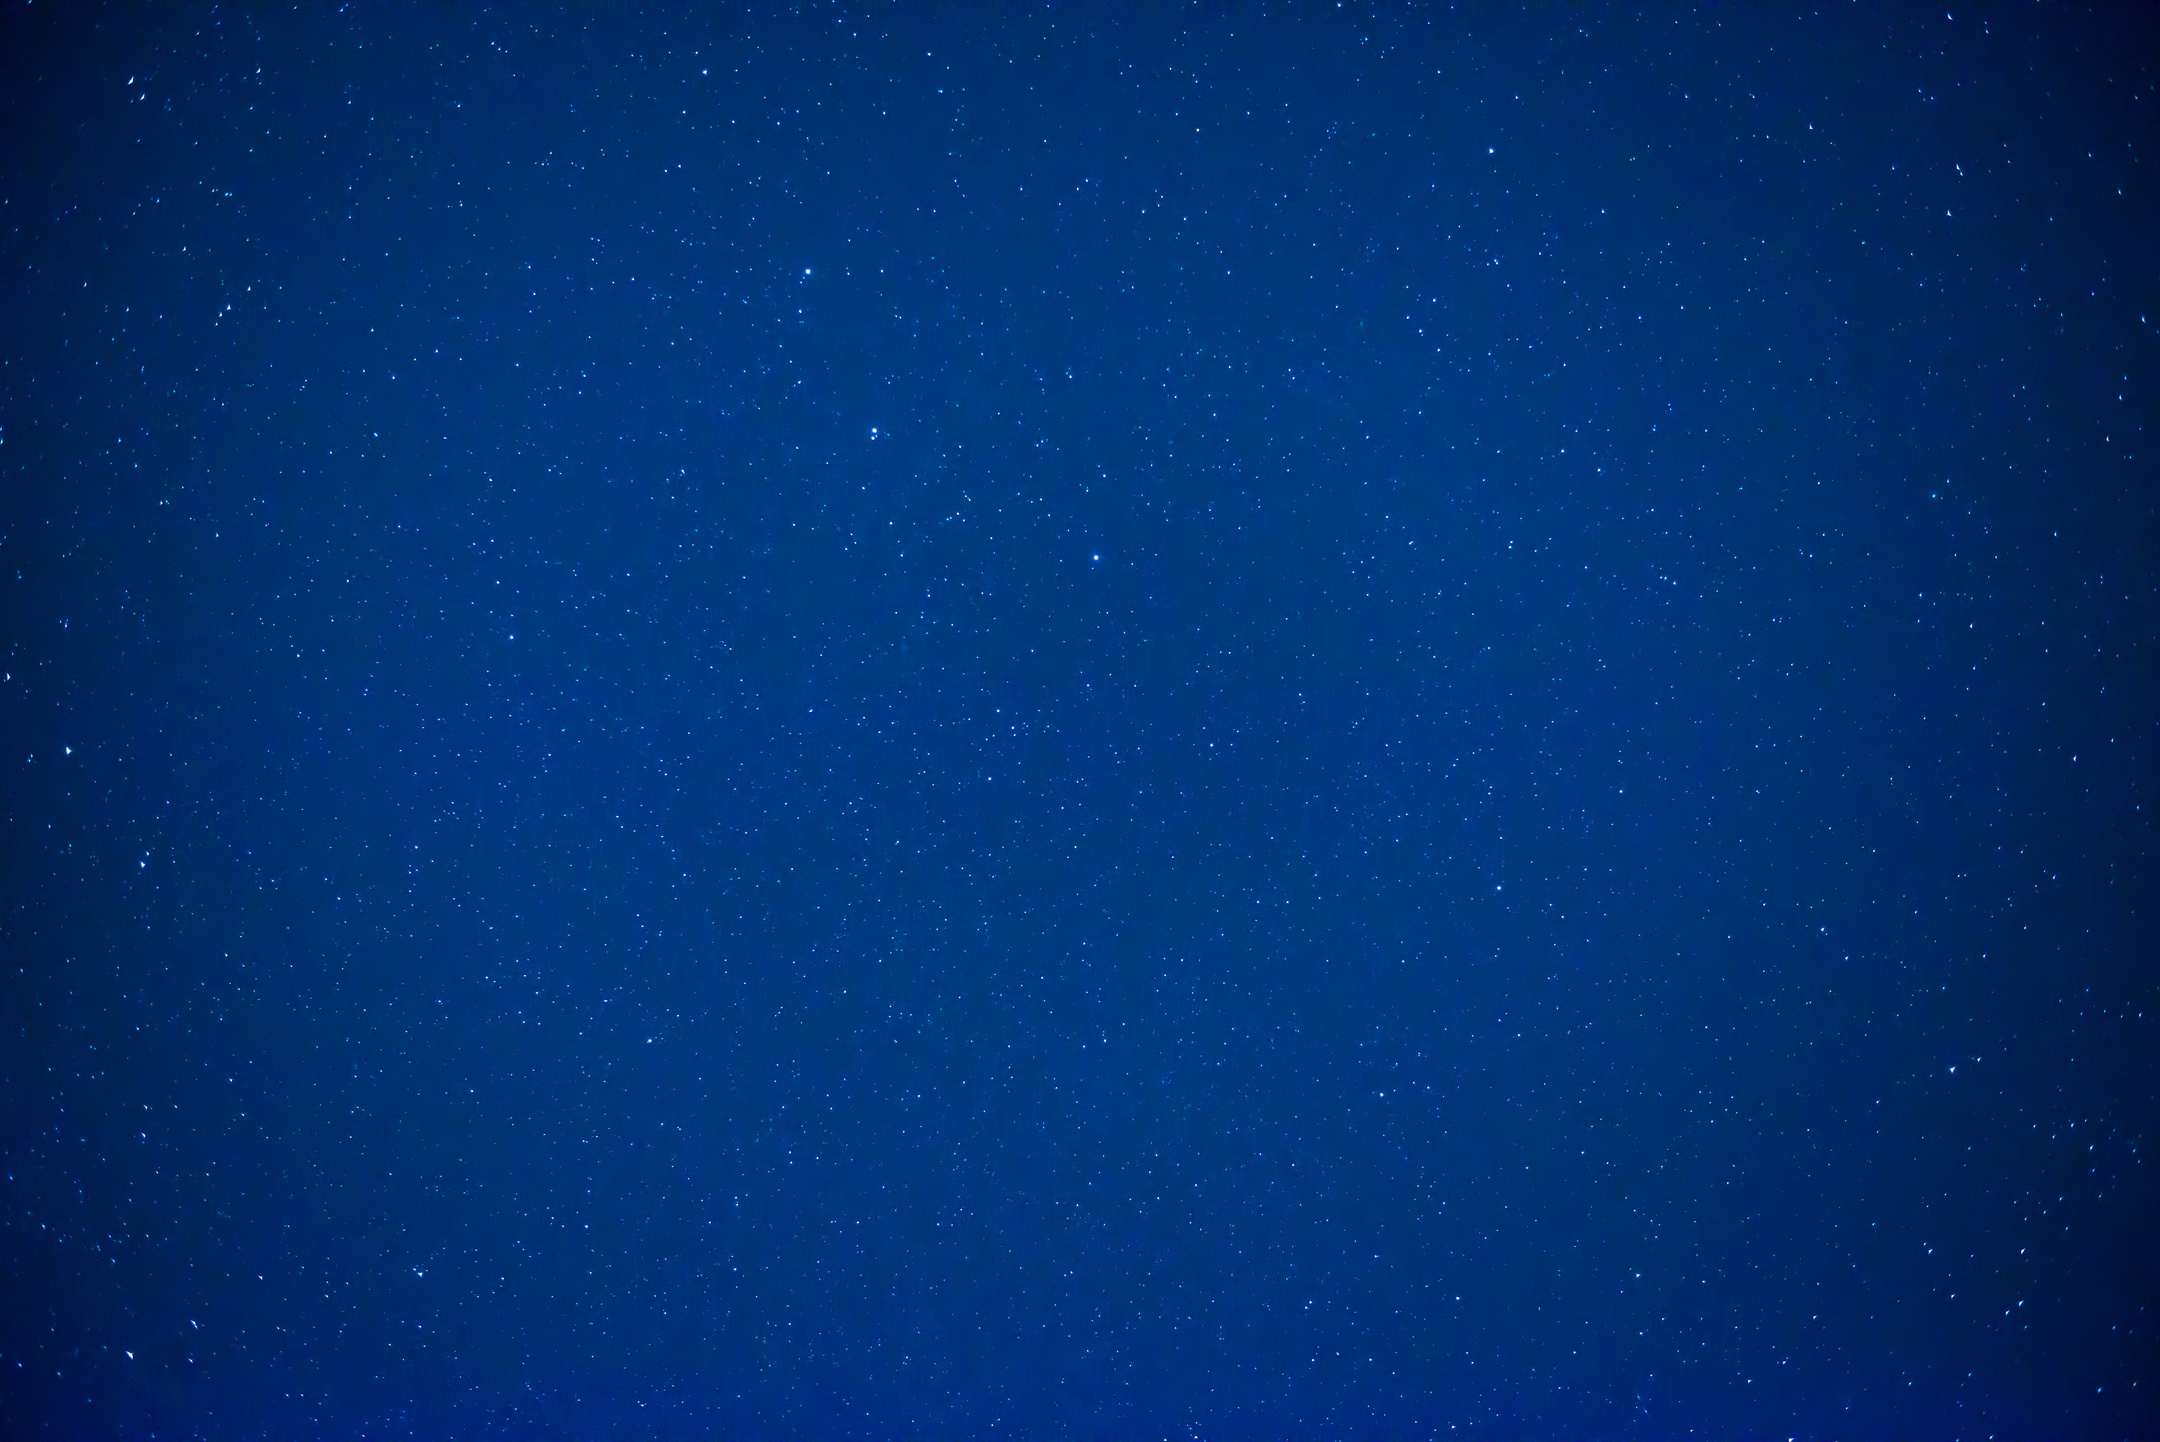 Night Dark Blue Sky with Stars